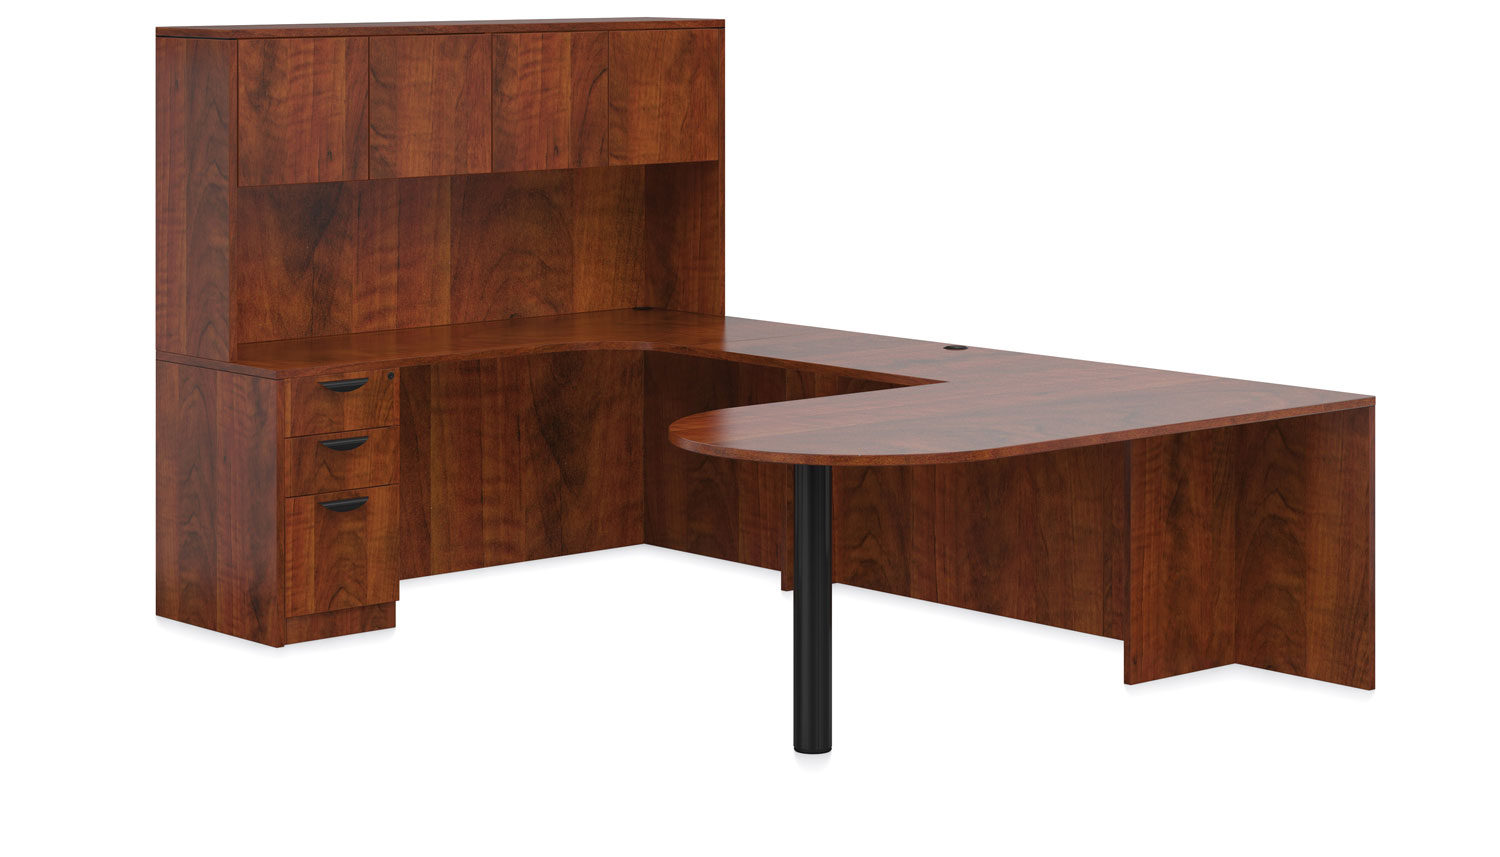 Affordable Office Furniture Desks from OTG - Shown in American Dark Cherry woodgrain